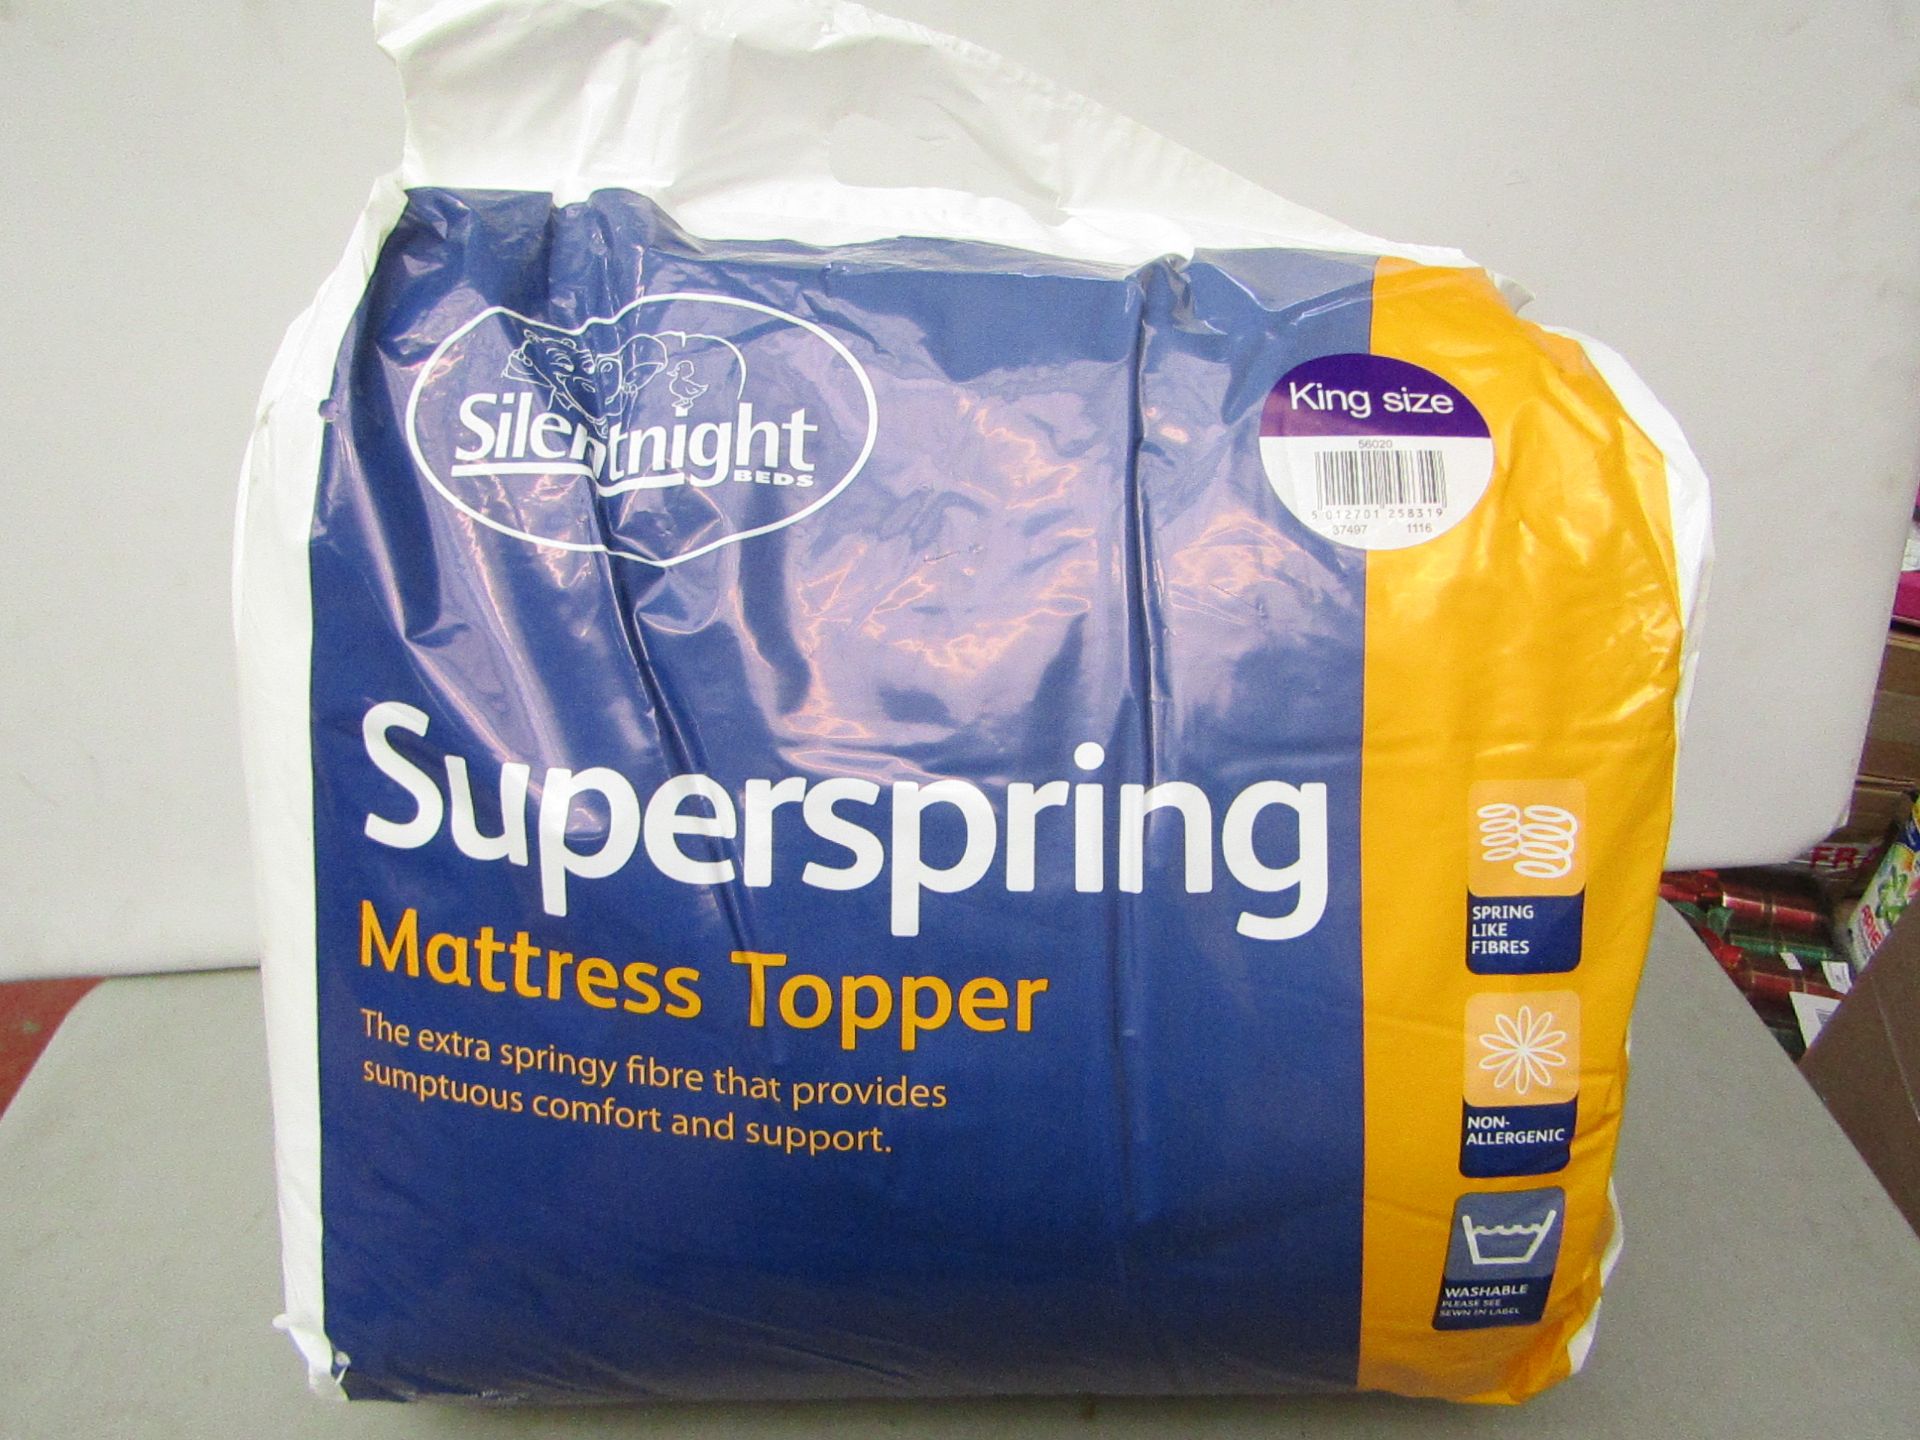 Silentnight Superspring Mattress Topper King size new & packaged